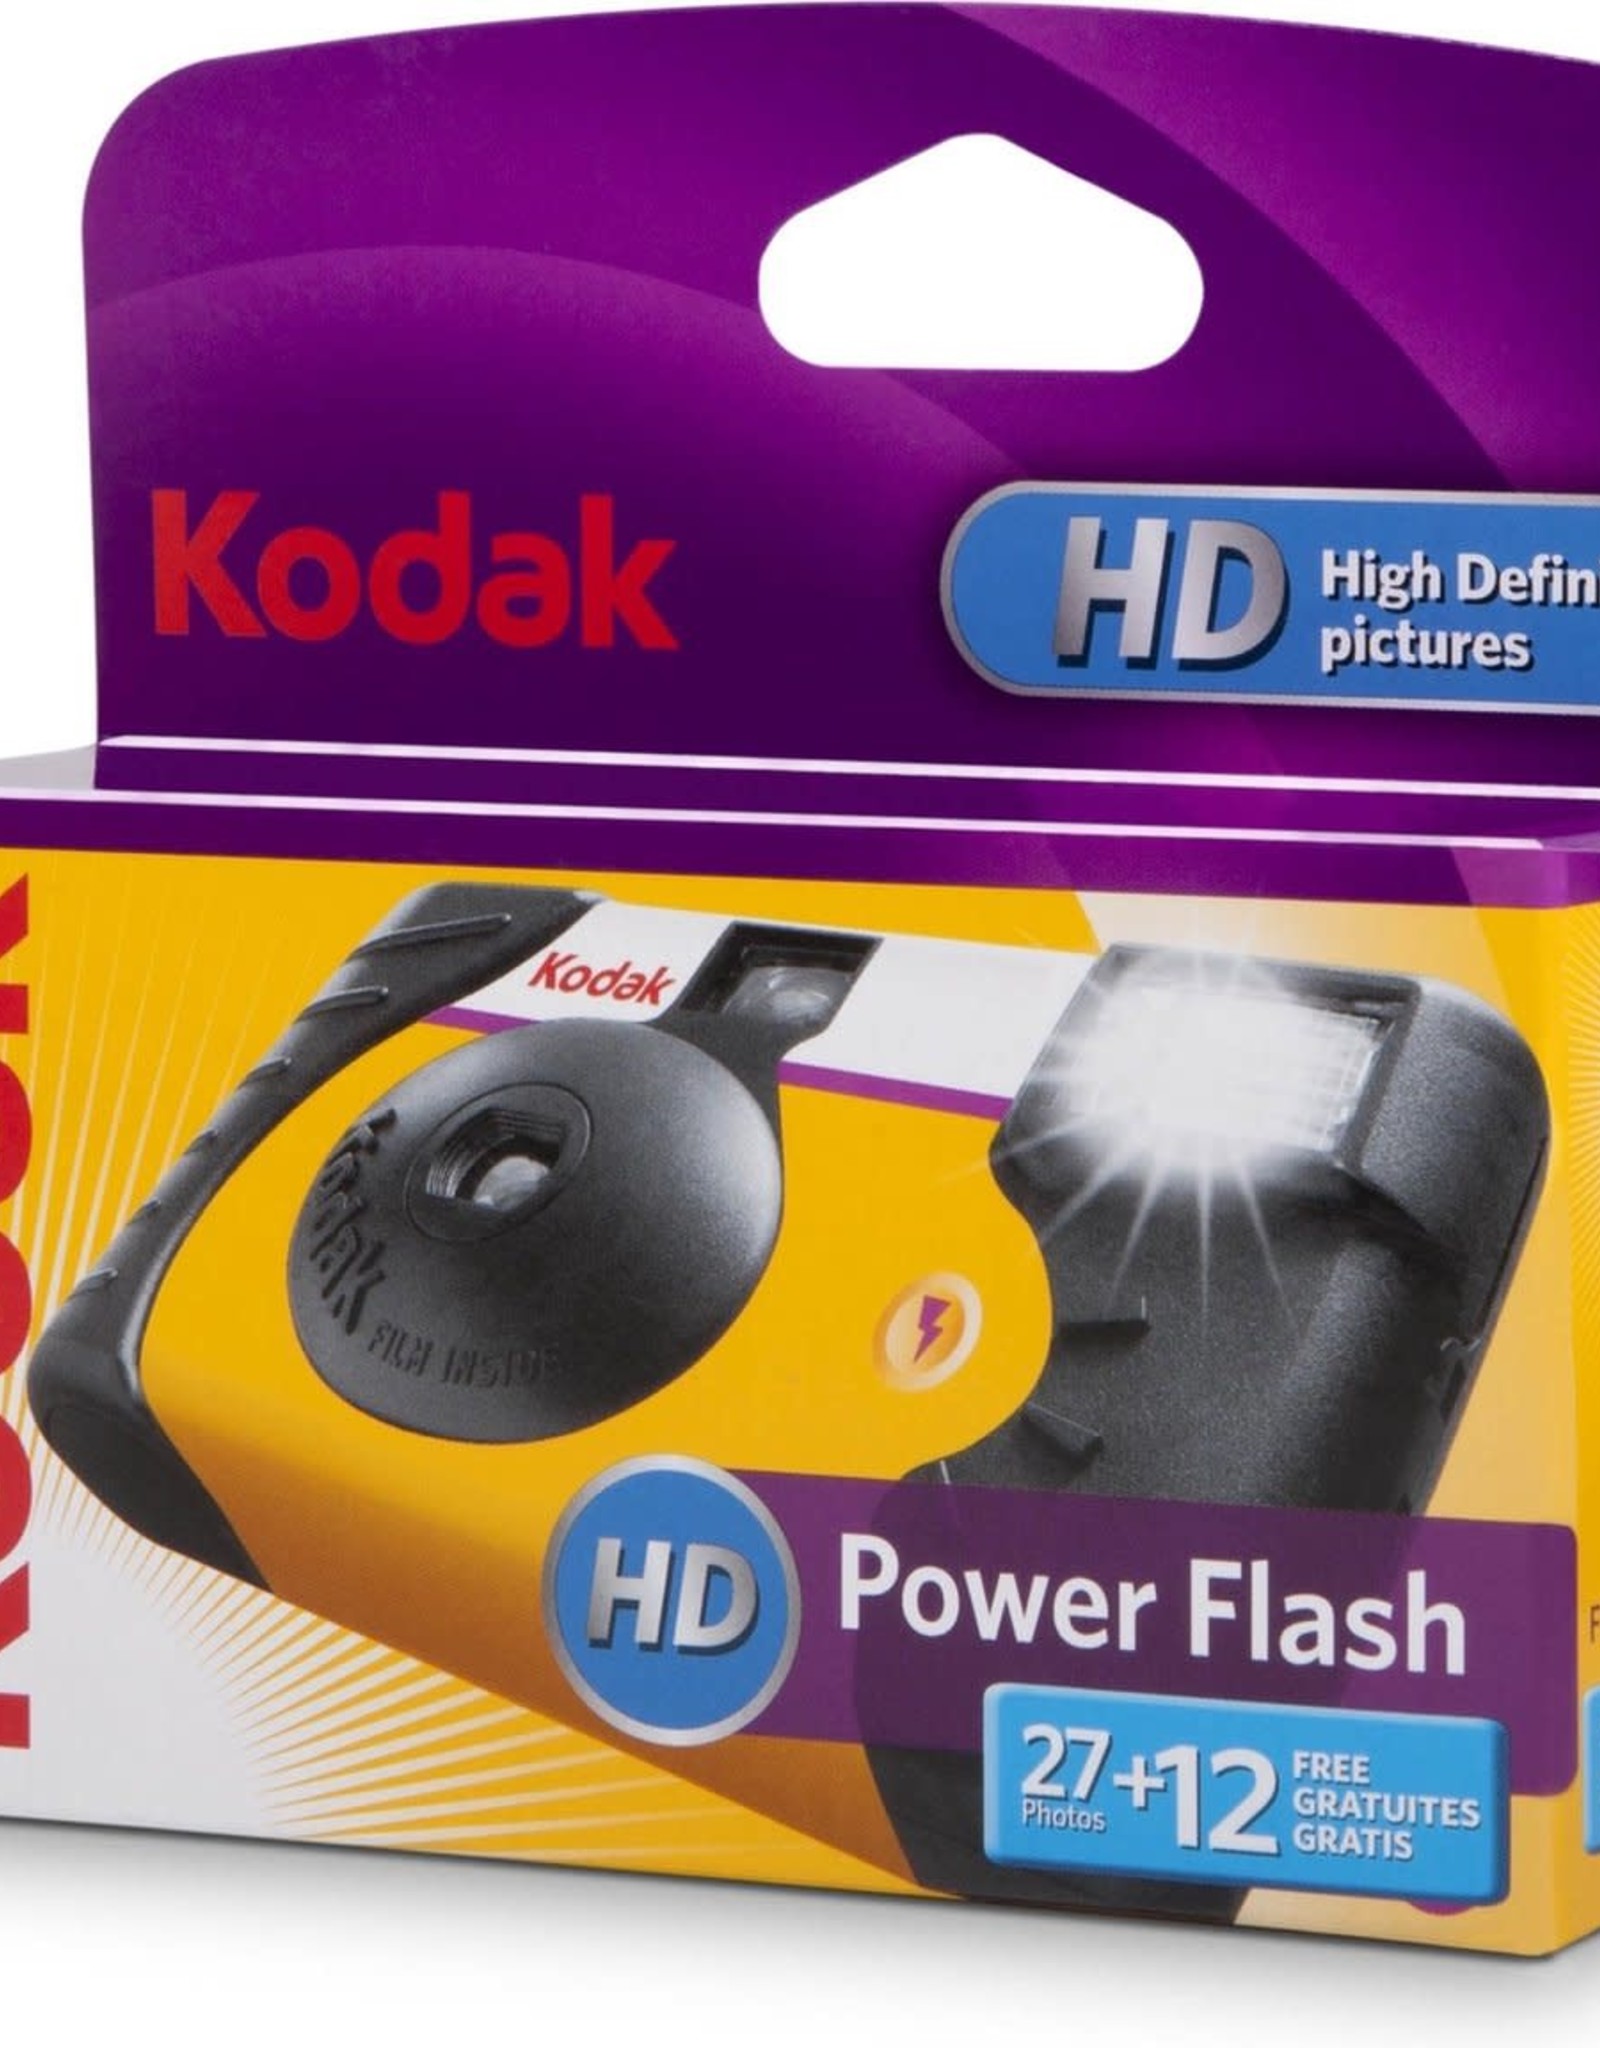 Kodak Kodak Funsaver & Sport Single Use Cameras